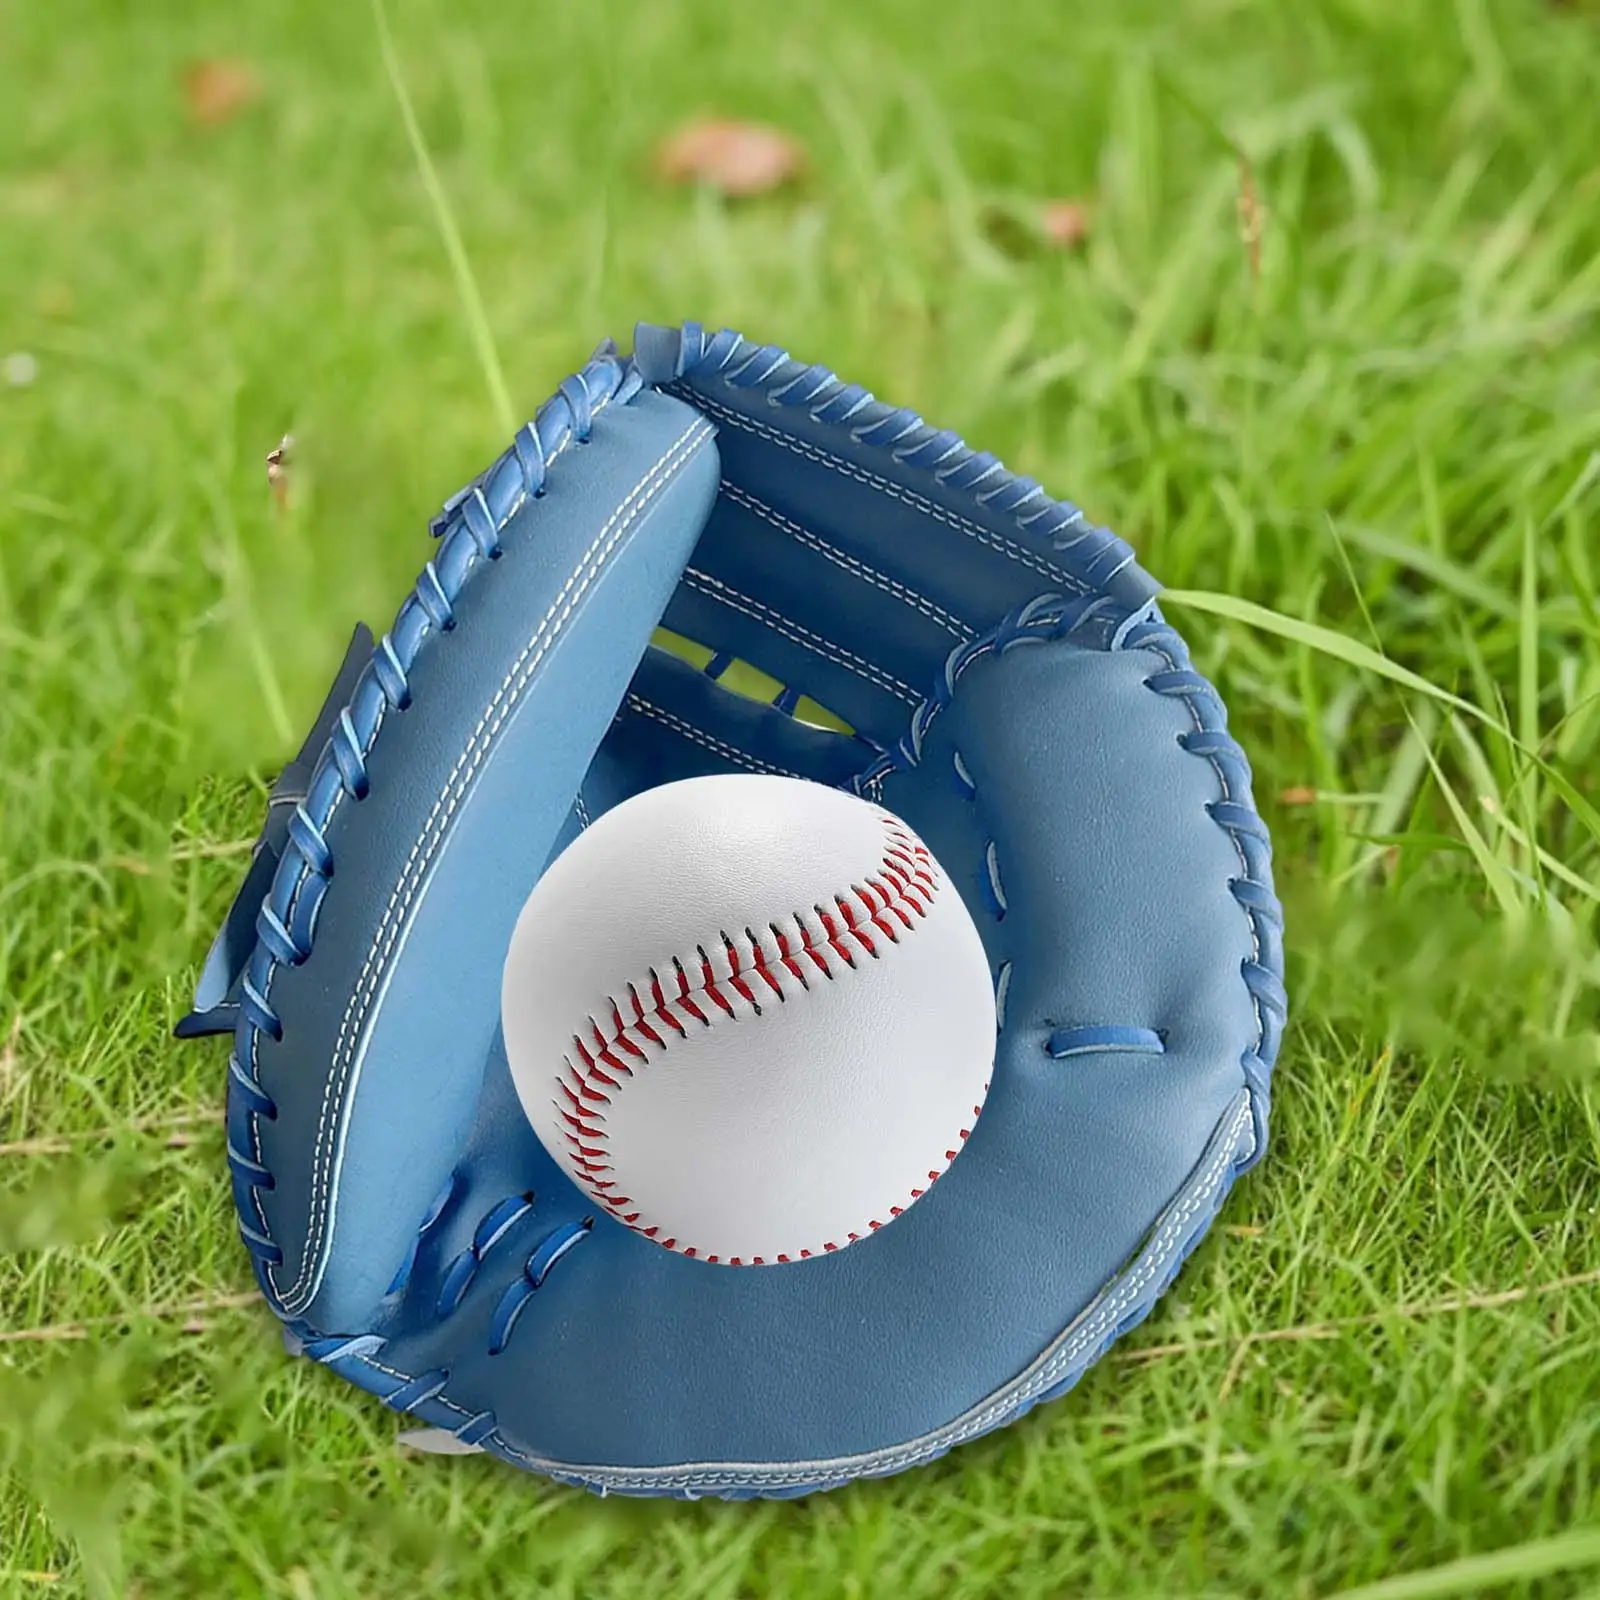 Baseball Catcher Gloves with Baseball Ball 12.5`` PU Leather Softball Gloves Catching Gloves for Men Women Adult